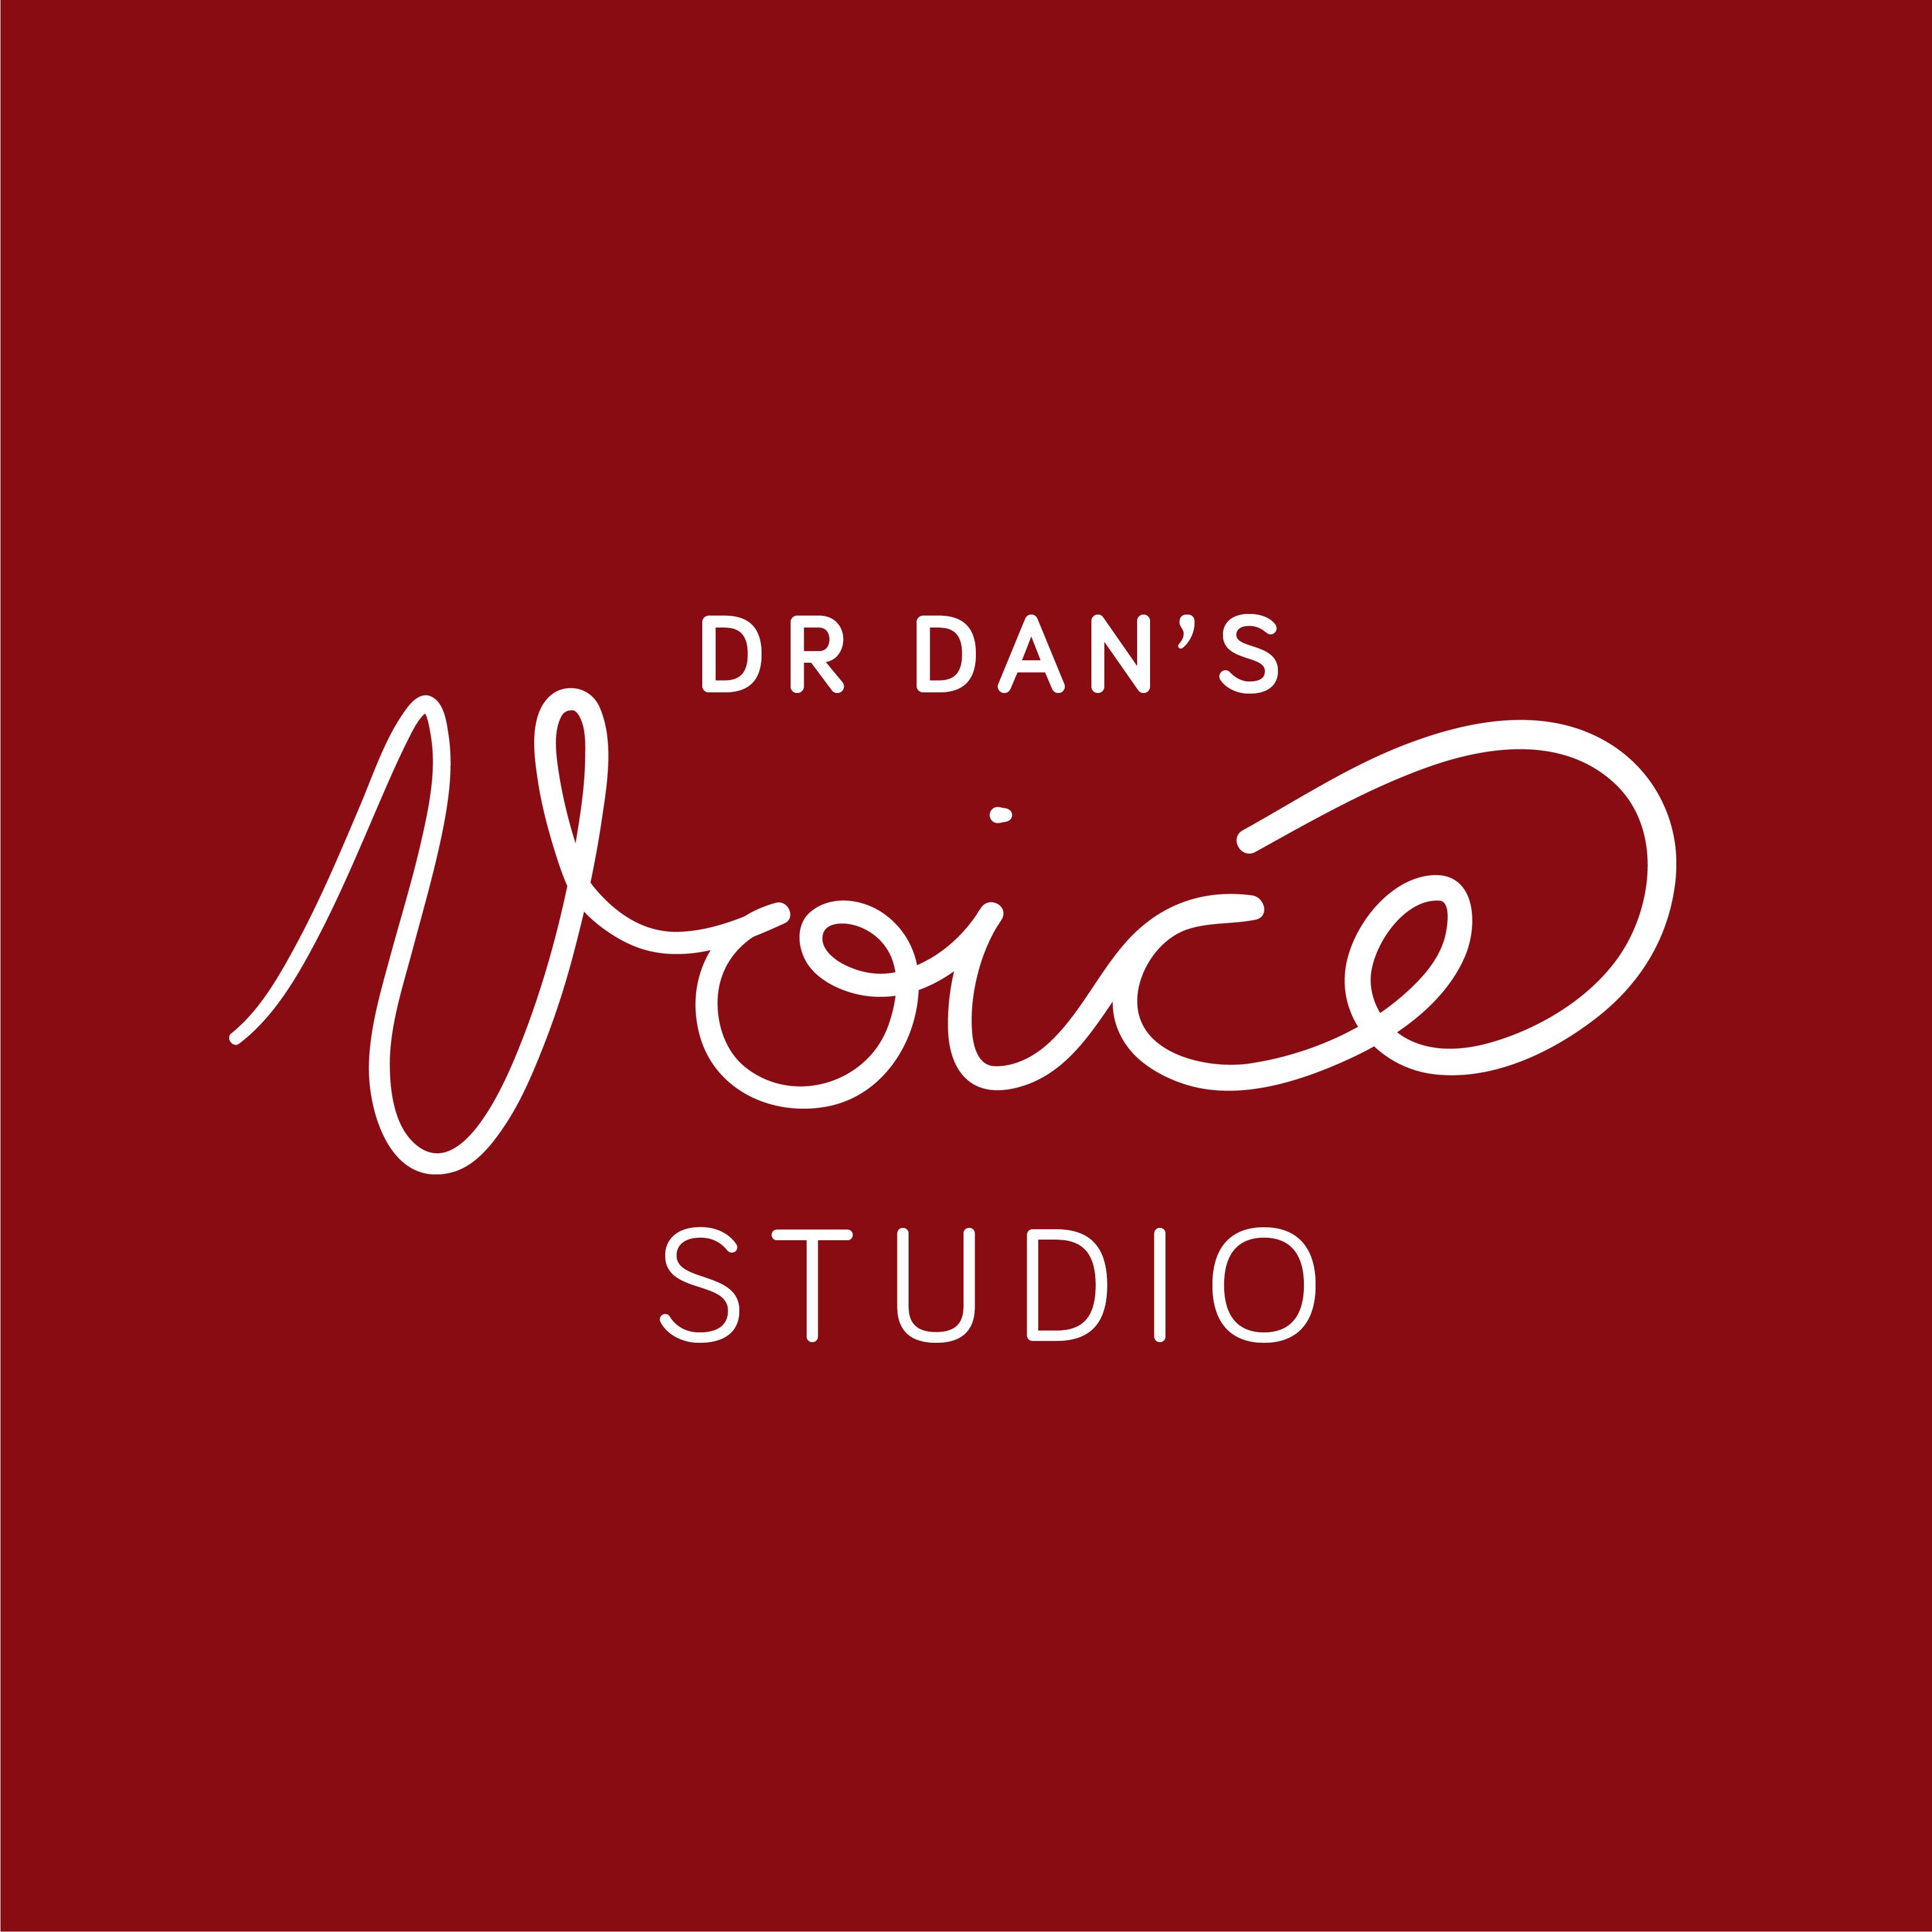 Dr Dan's Voice Studio